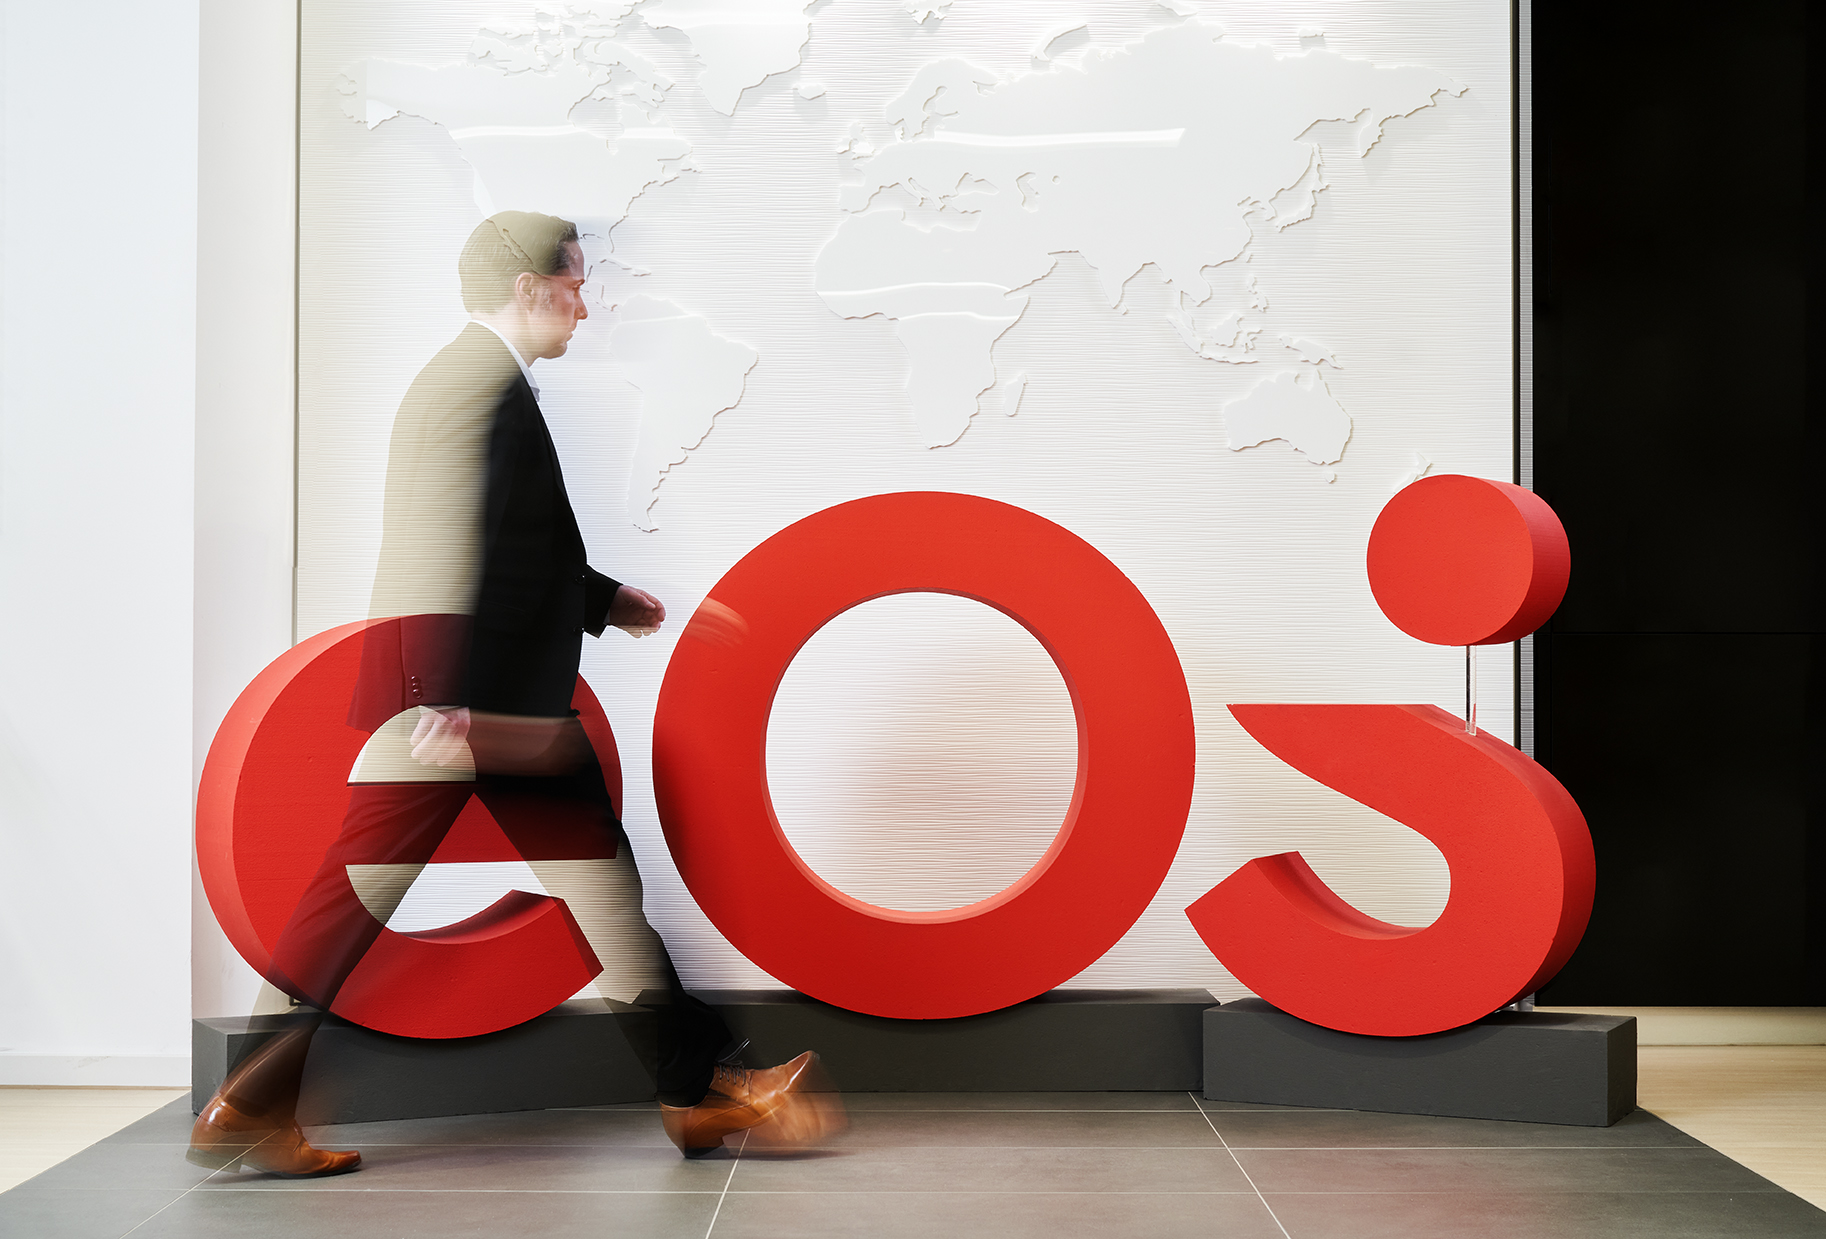 Sådan er det nye brand EOS: Det nye logo pryder lobbyen i EOS' hovedkvarter.